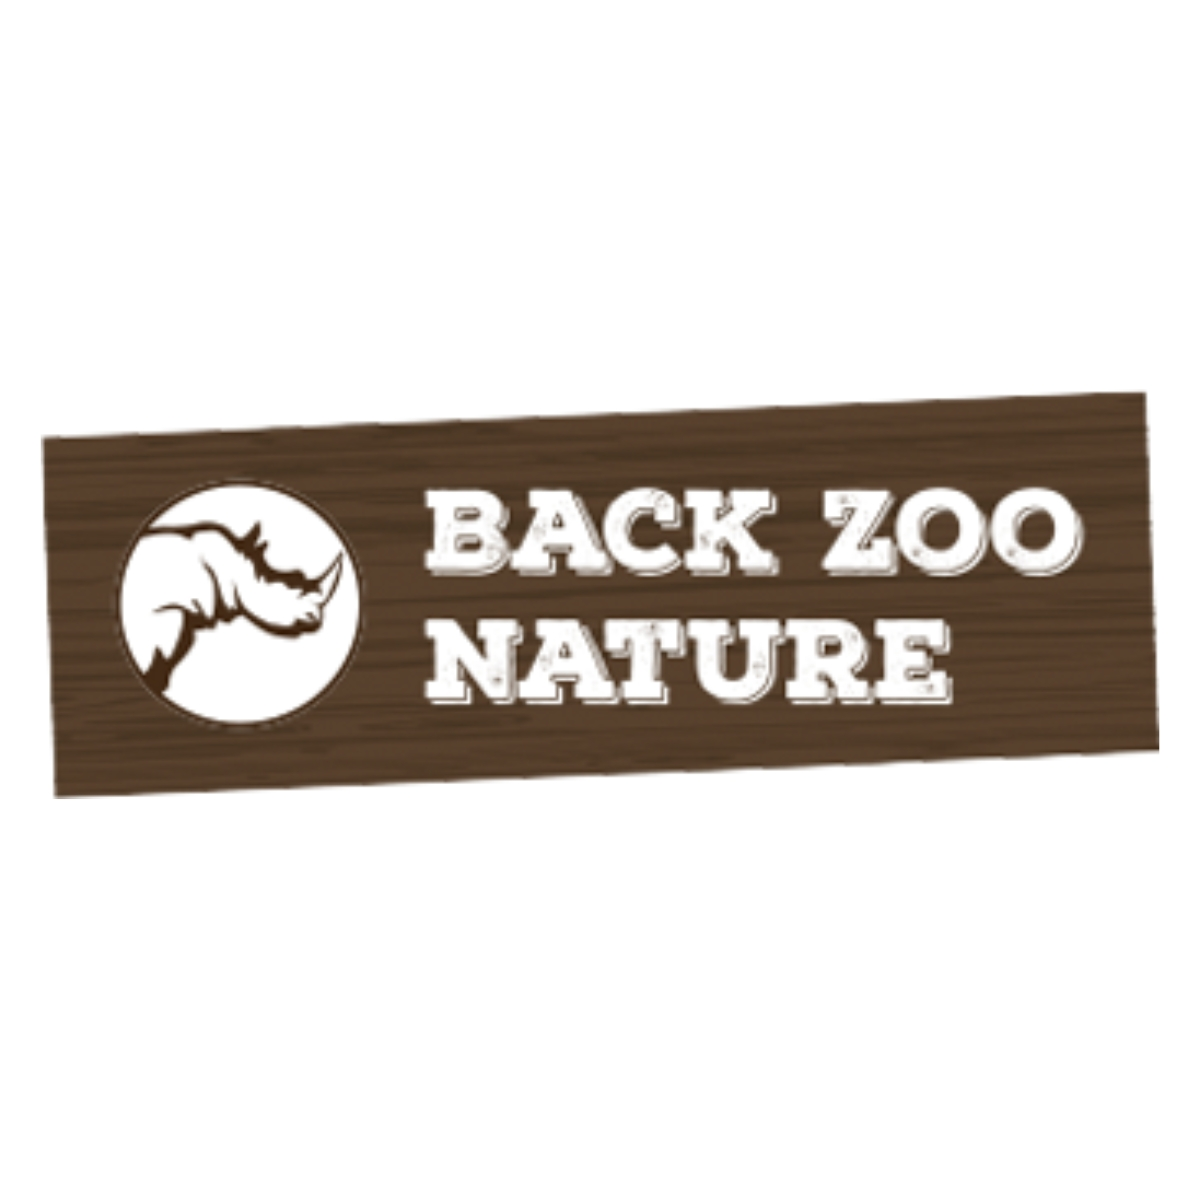 Back Zoo Nature